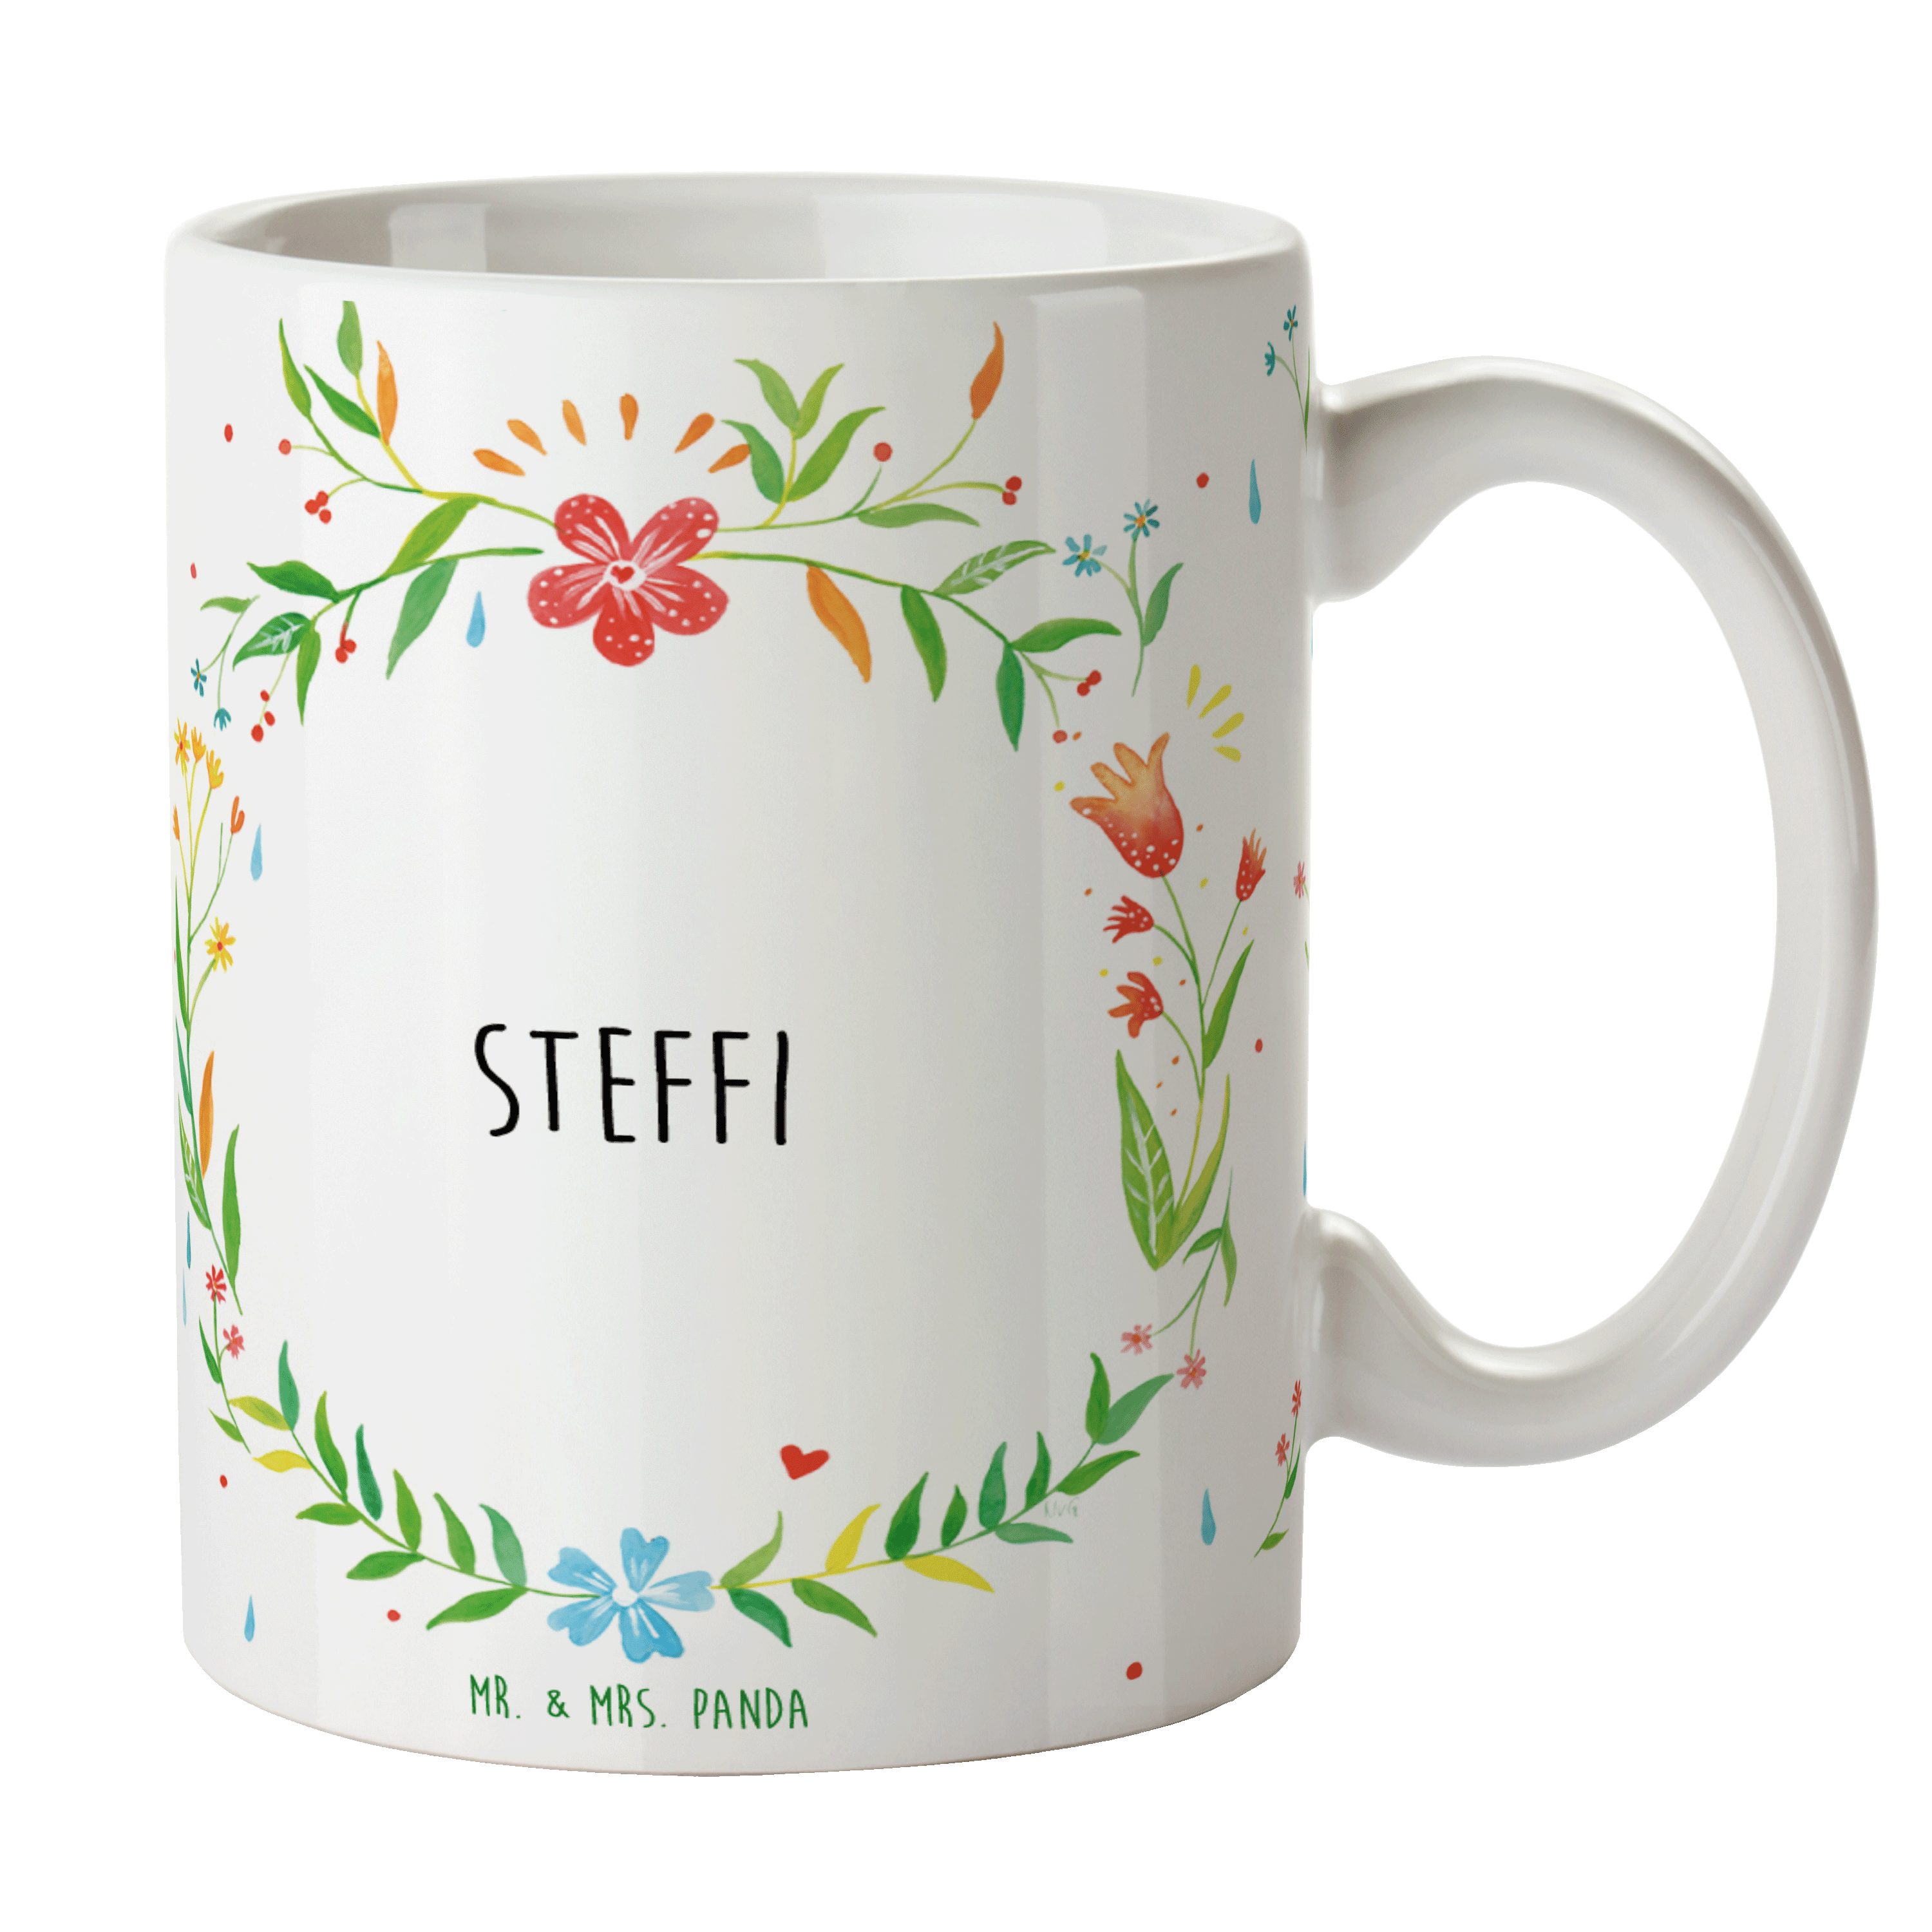 Mr. & Mrs. Panda Tasse Steffi - Geschenk, Geschenk Tasse, Tasse Motive, Büro Tasse, Teetasse, Keramik